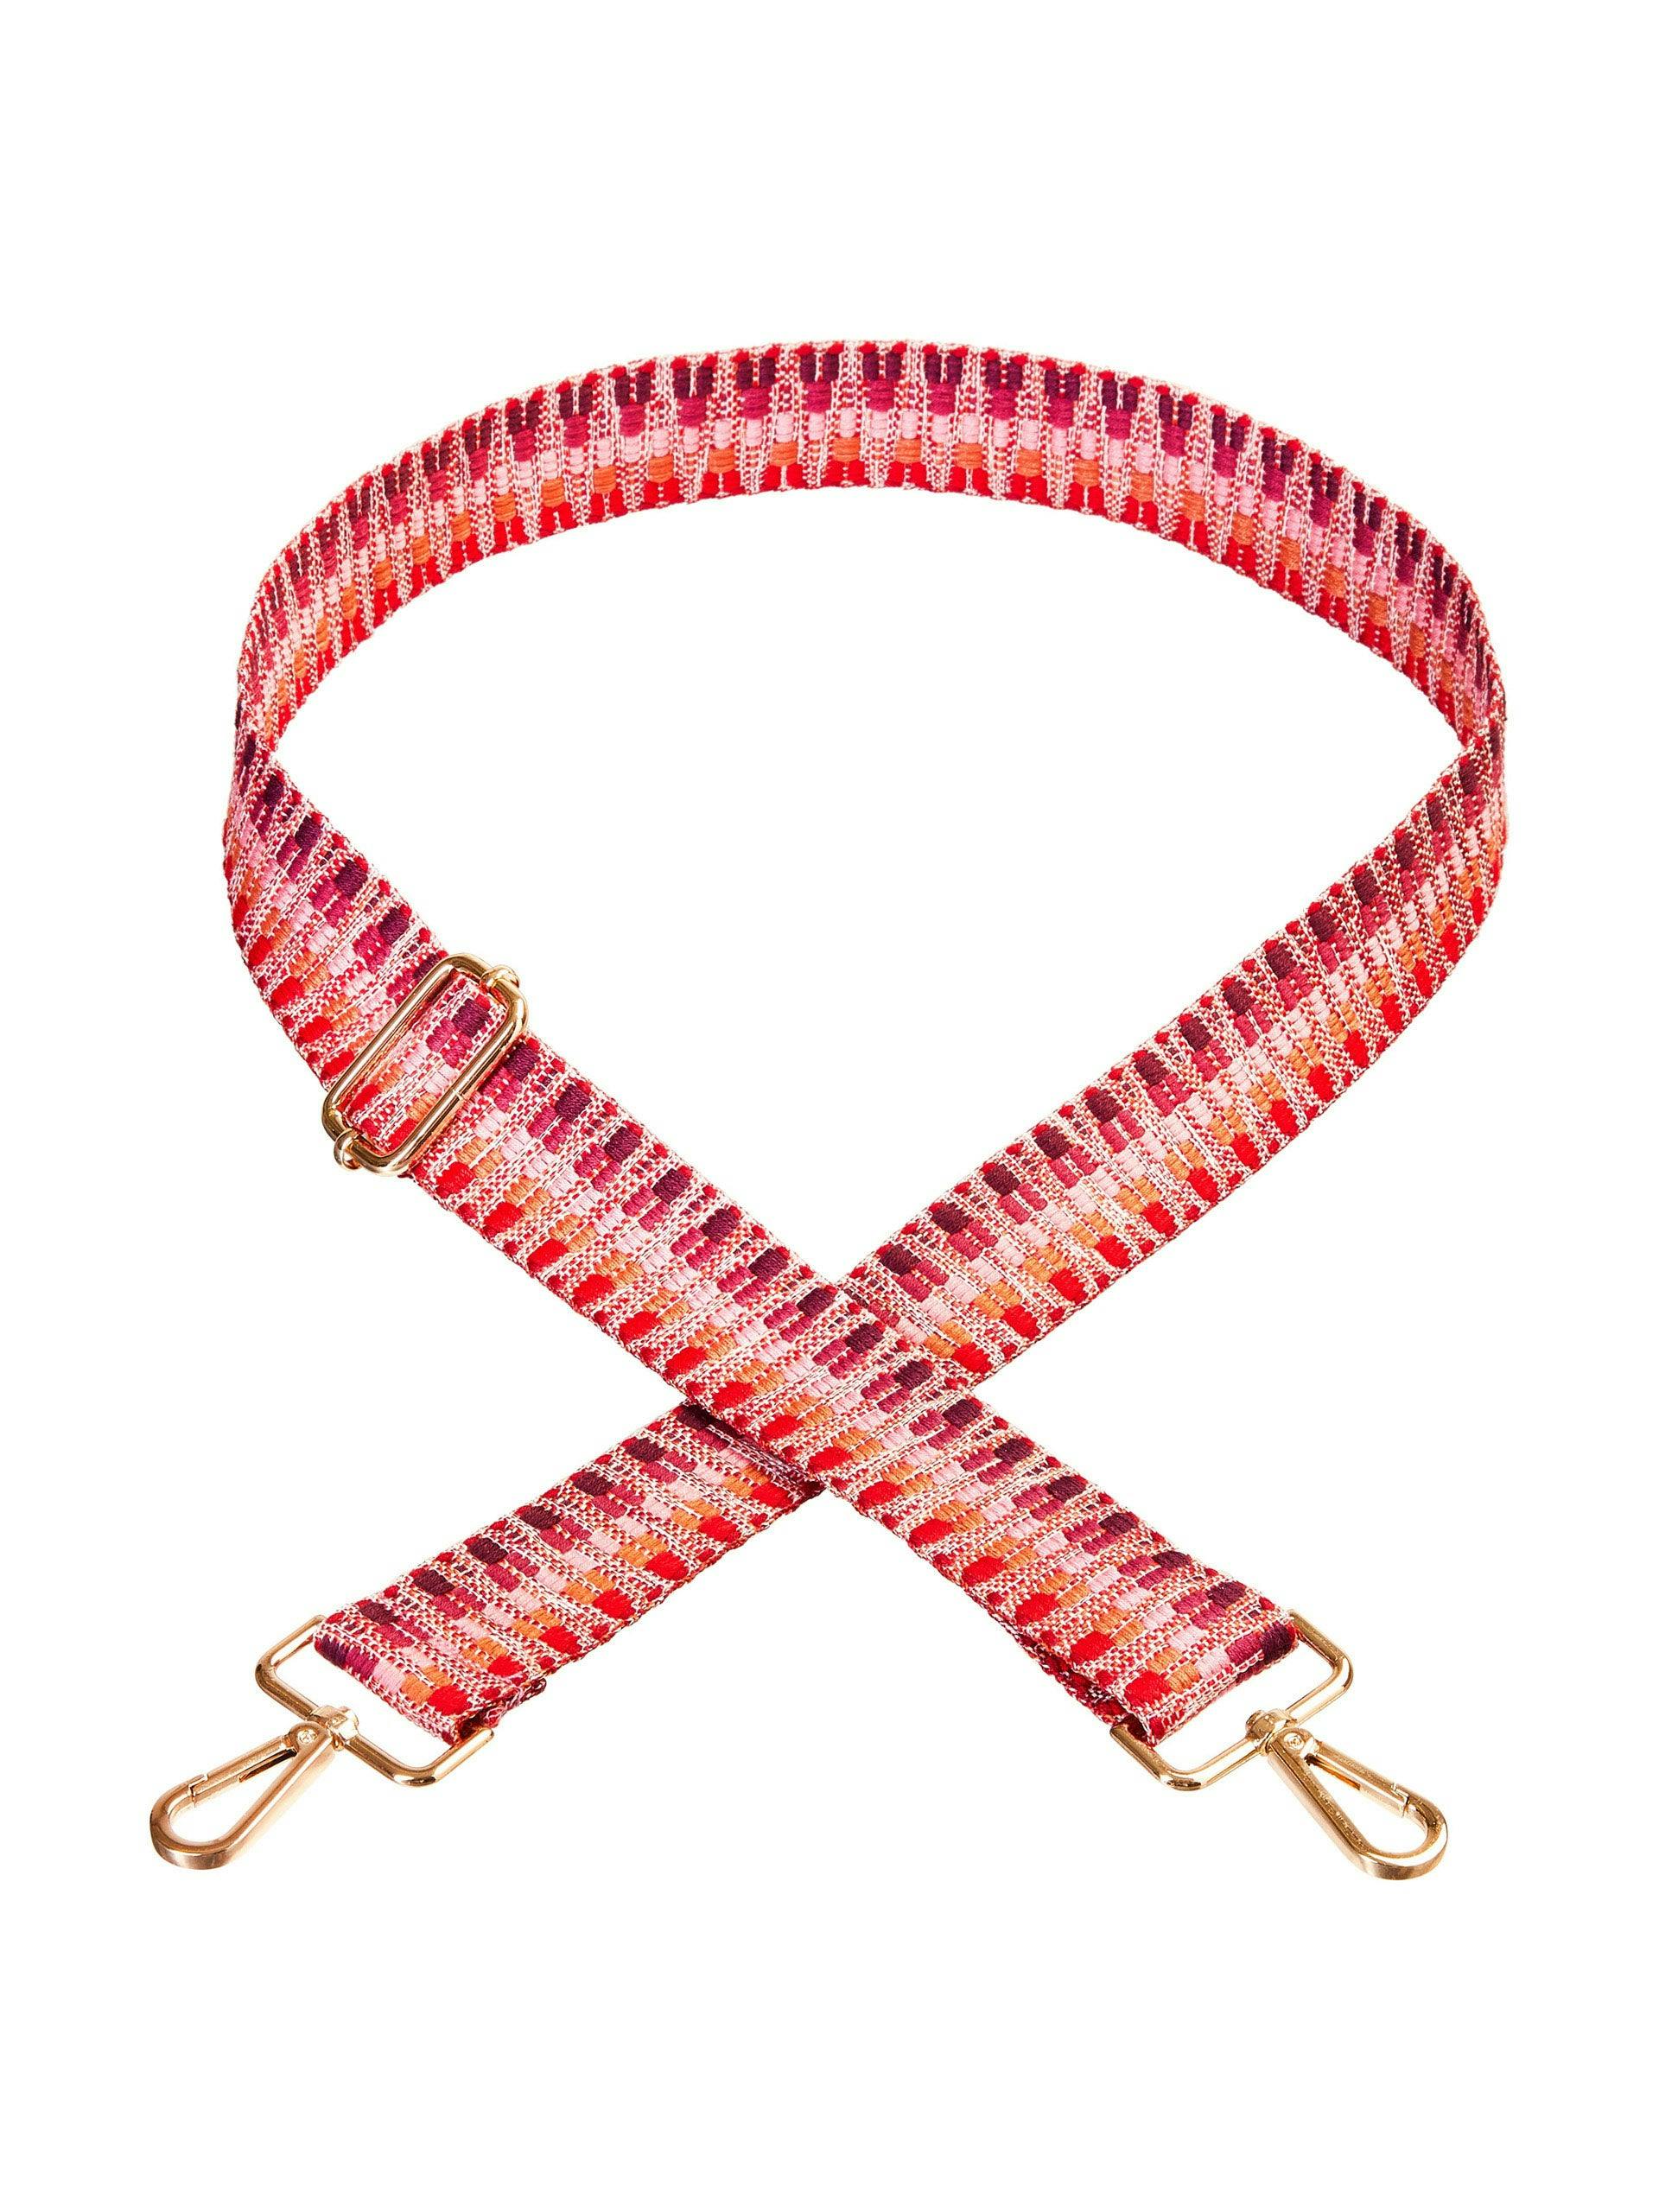 Pink patterned strap